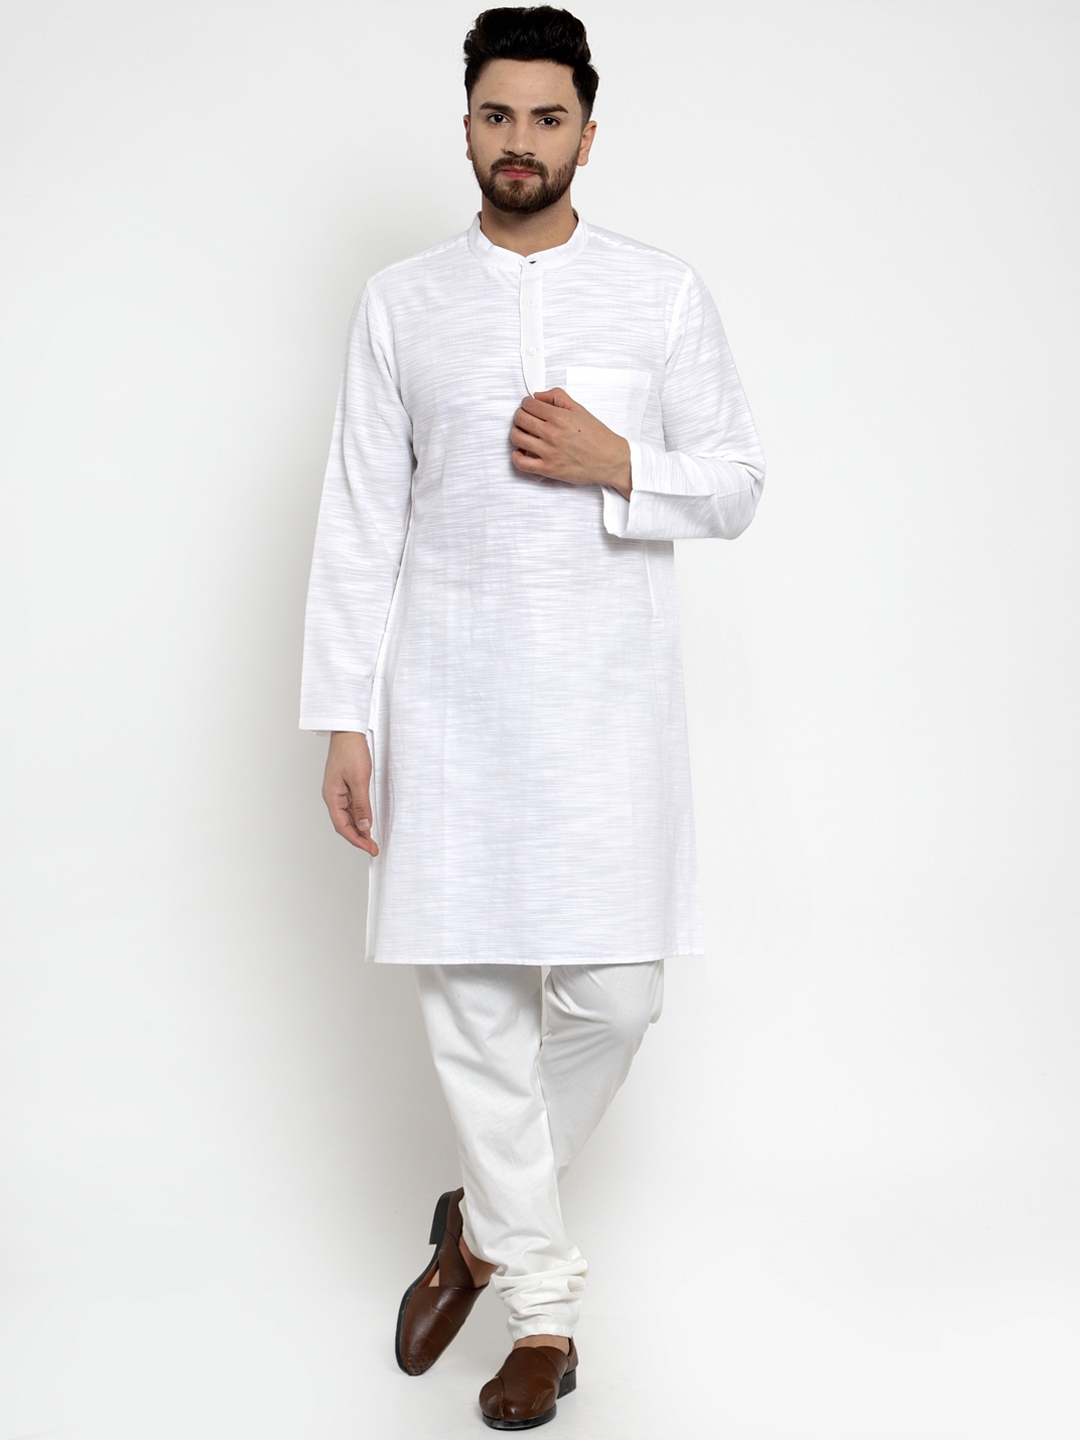 Traditional Wear Mens Kurta Pajama Men Indian Ethnic Dress Plain Shirt ...